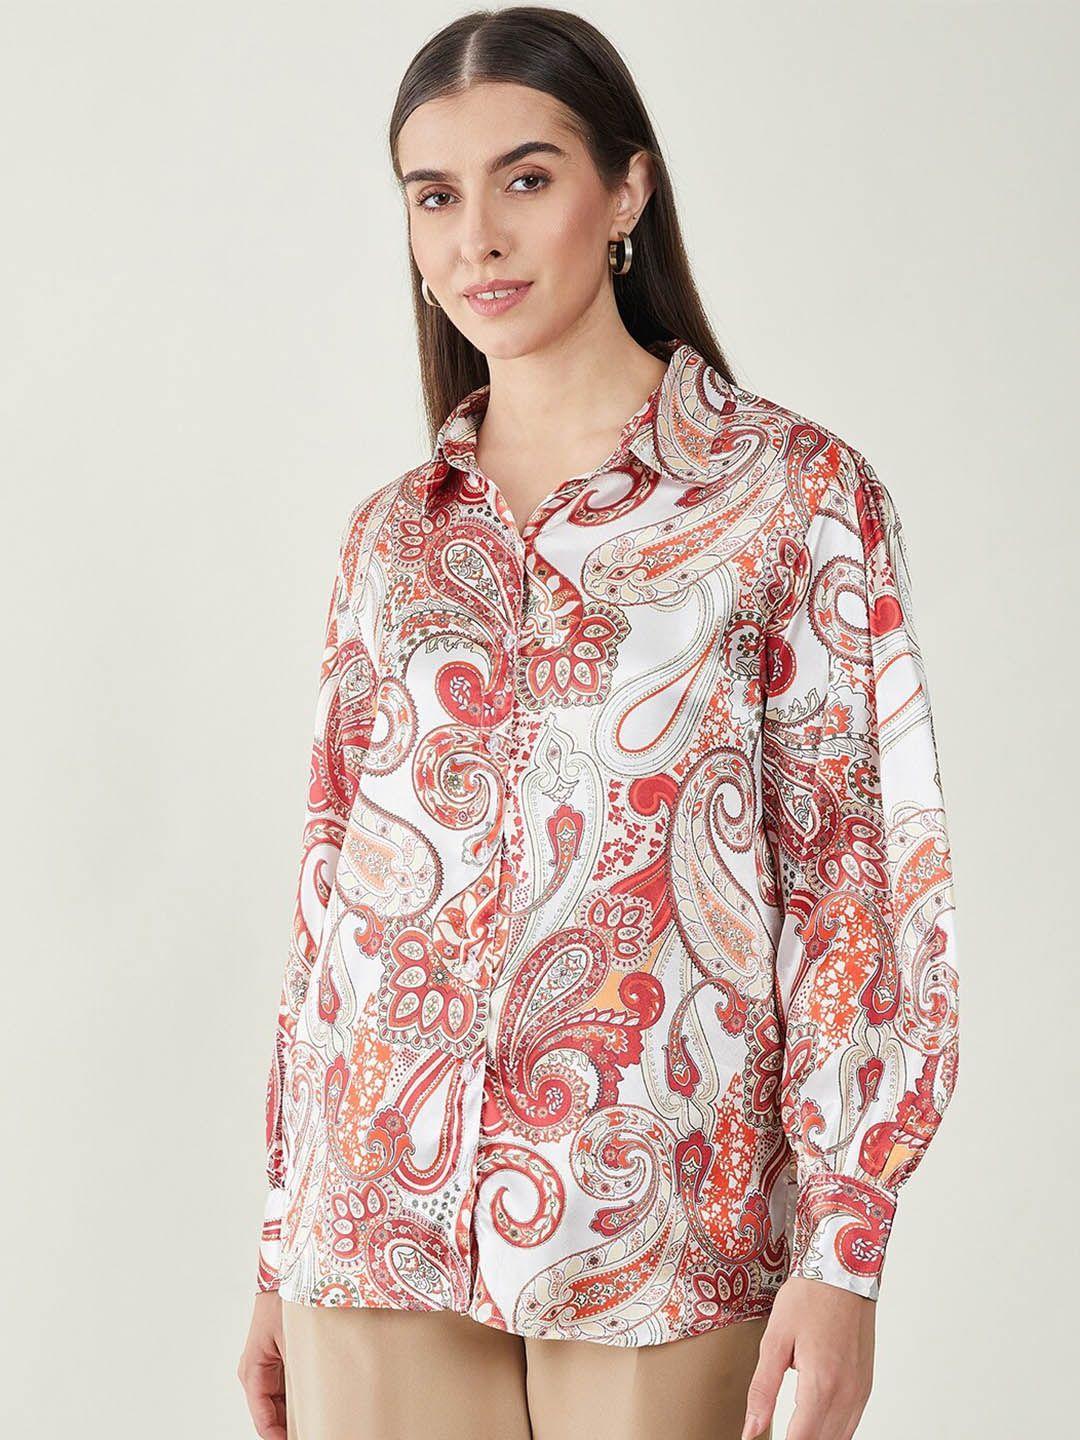 bitterlime paisley ethnic motifs printed comfort regular fit opaque casual shirt